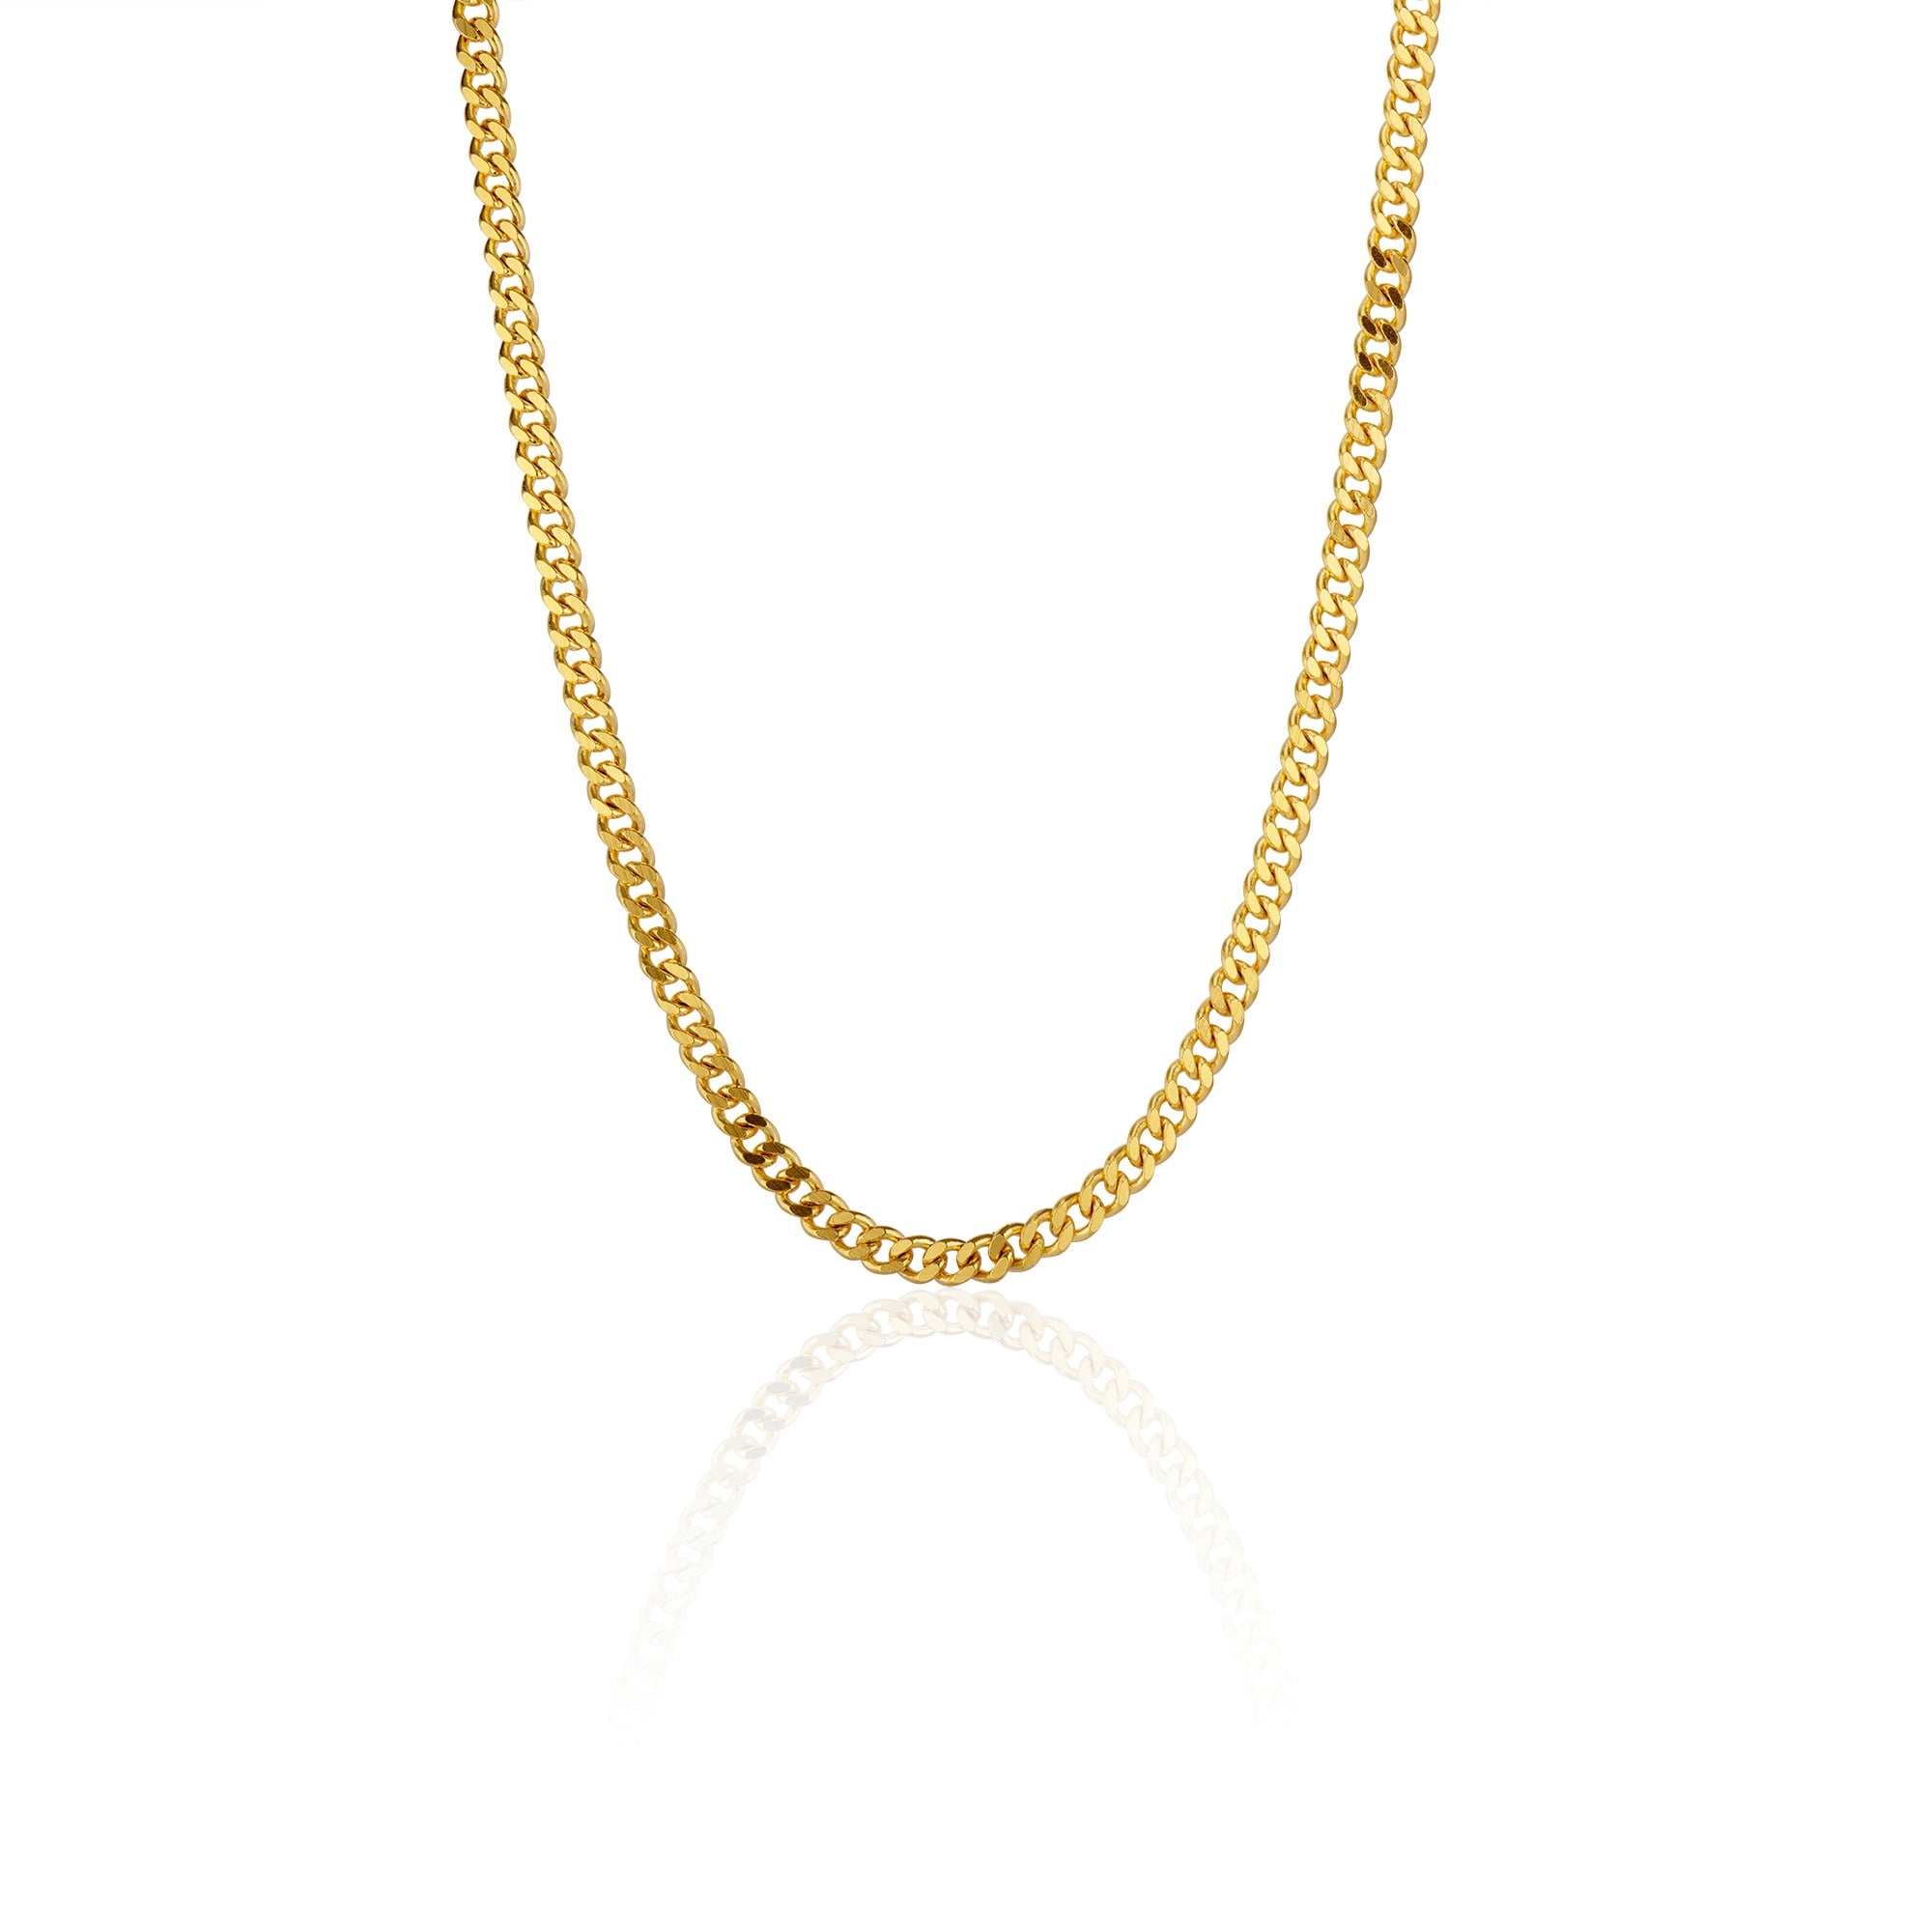 Gold Chain - 2.4 mm Flat Curb Design - 46 cm (18.1